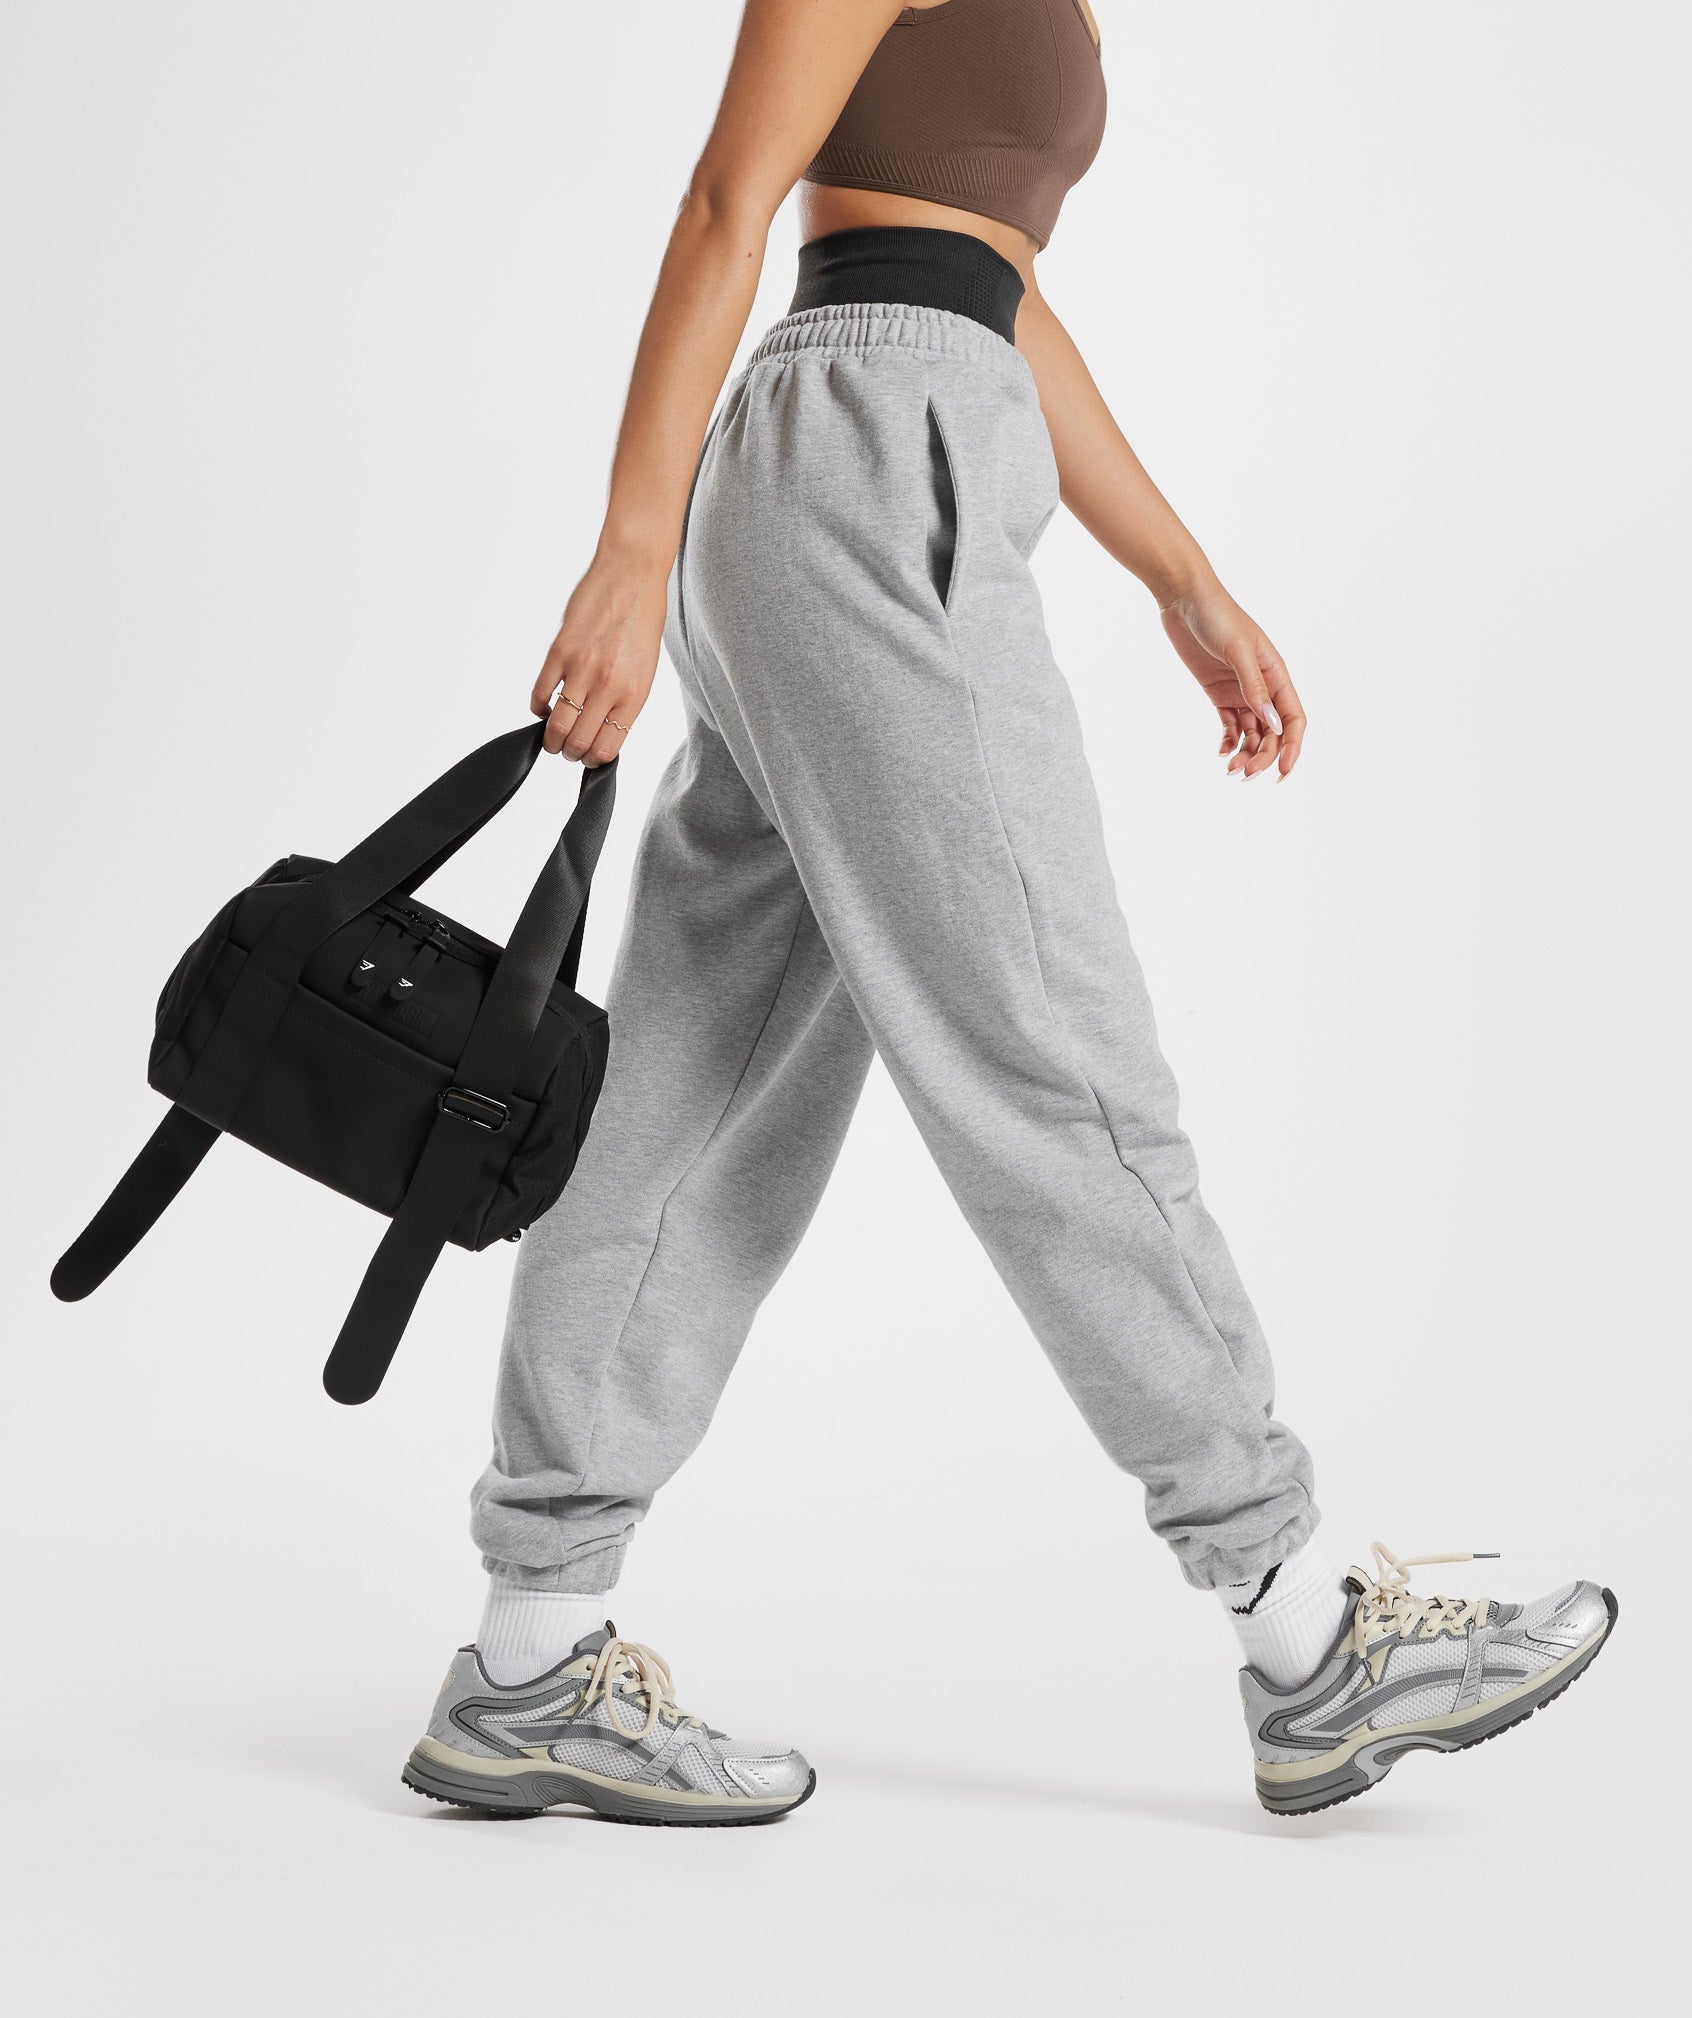 Gymshark Everyday Mini Backpack Black 12”H x 9”W x 4”D Side